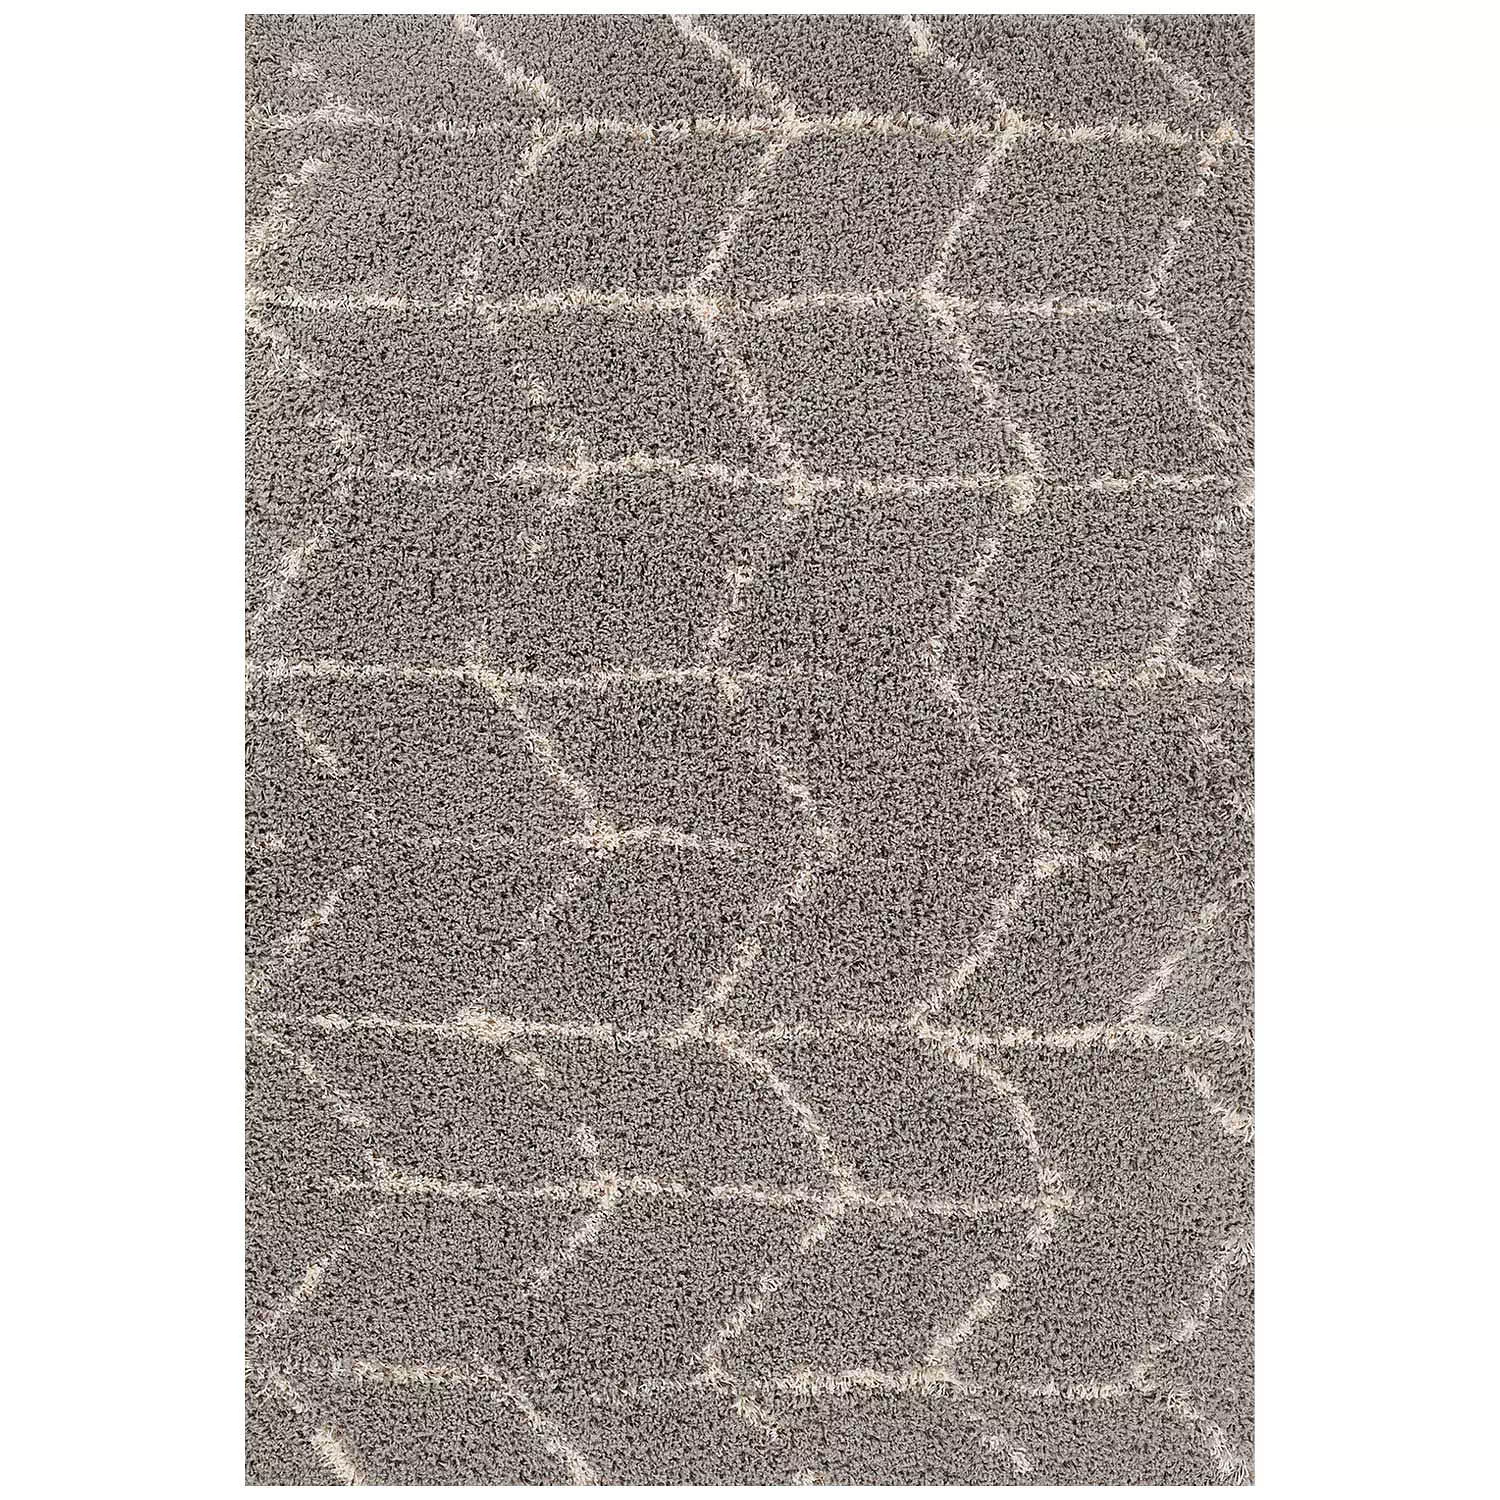 LOLA Collection, decorative area rug, grey chevron, 4'x6'